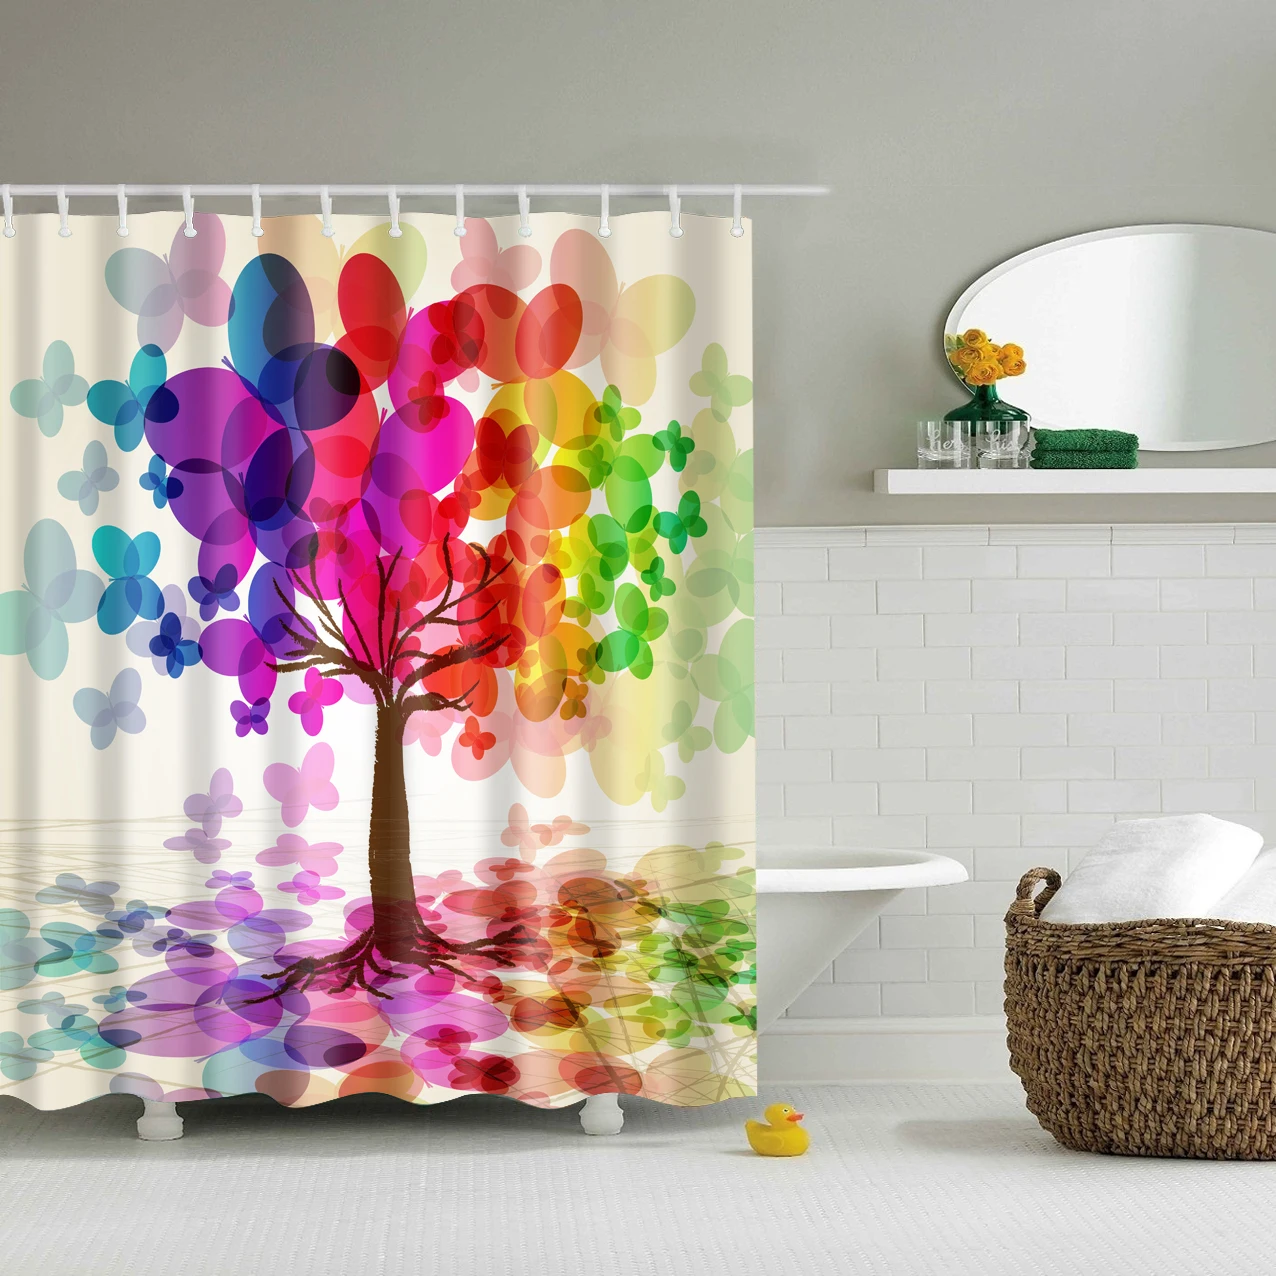 Oil painting print Shower Curtain Long 180x200cm Waterproof polyester blackout 3D print Bath curtain for bathroom curtain - Цвет: J